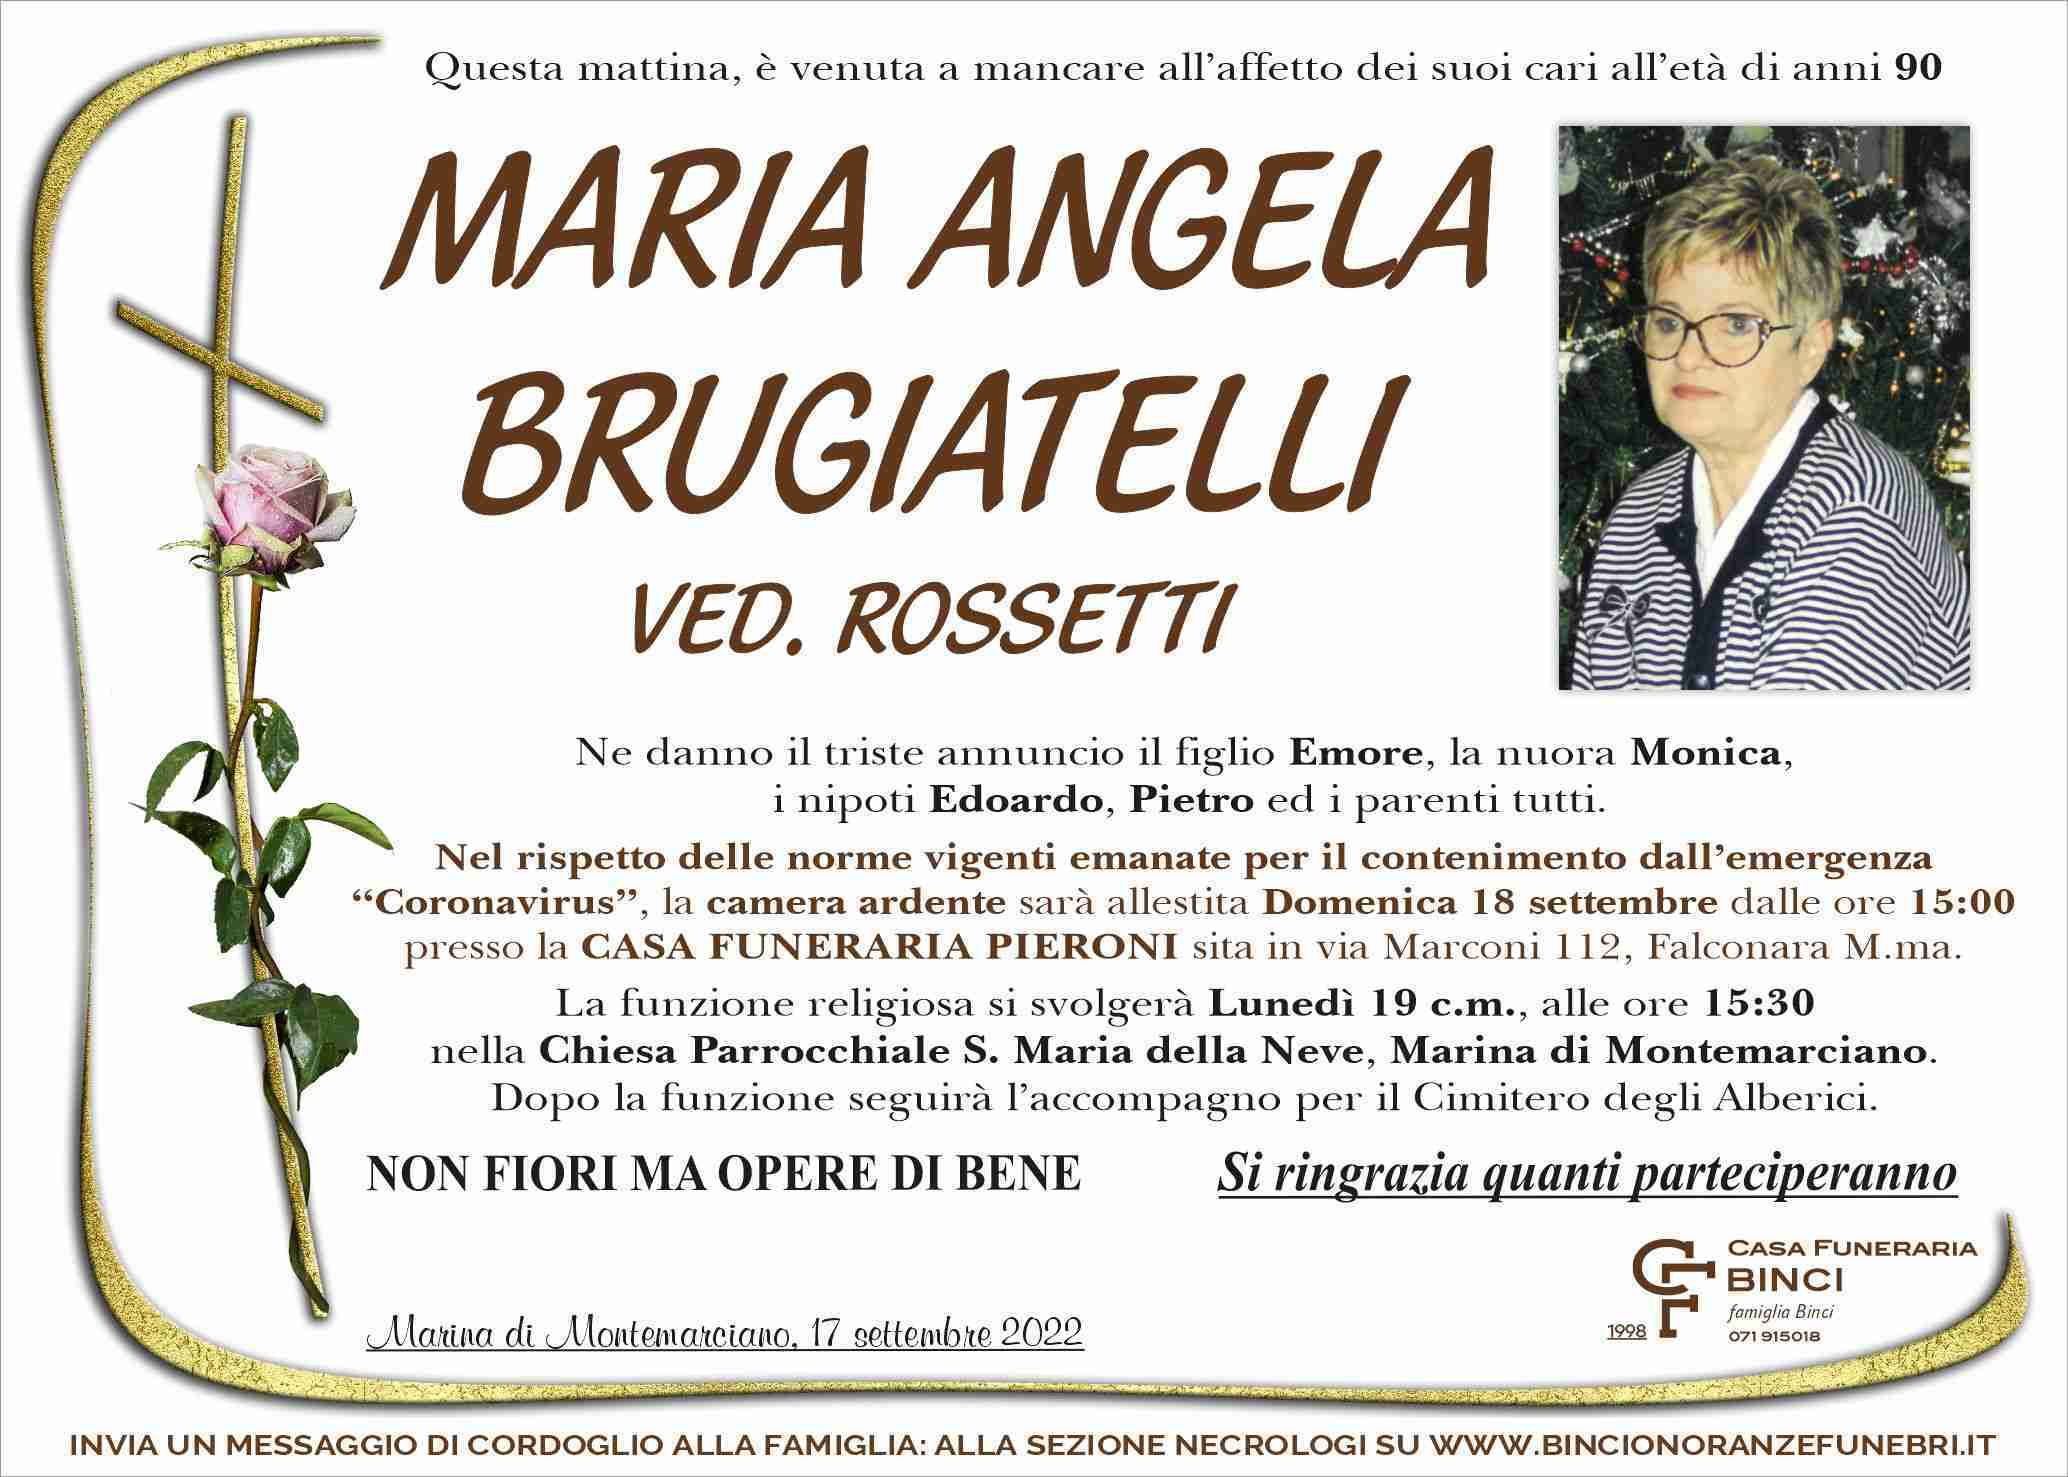 Maria Angela Brugiatelli